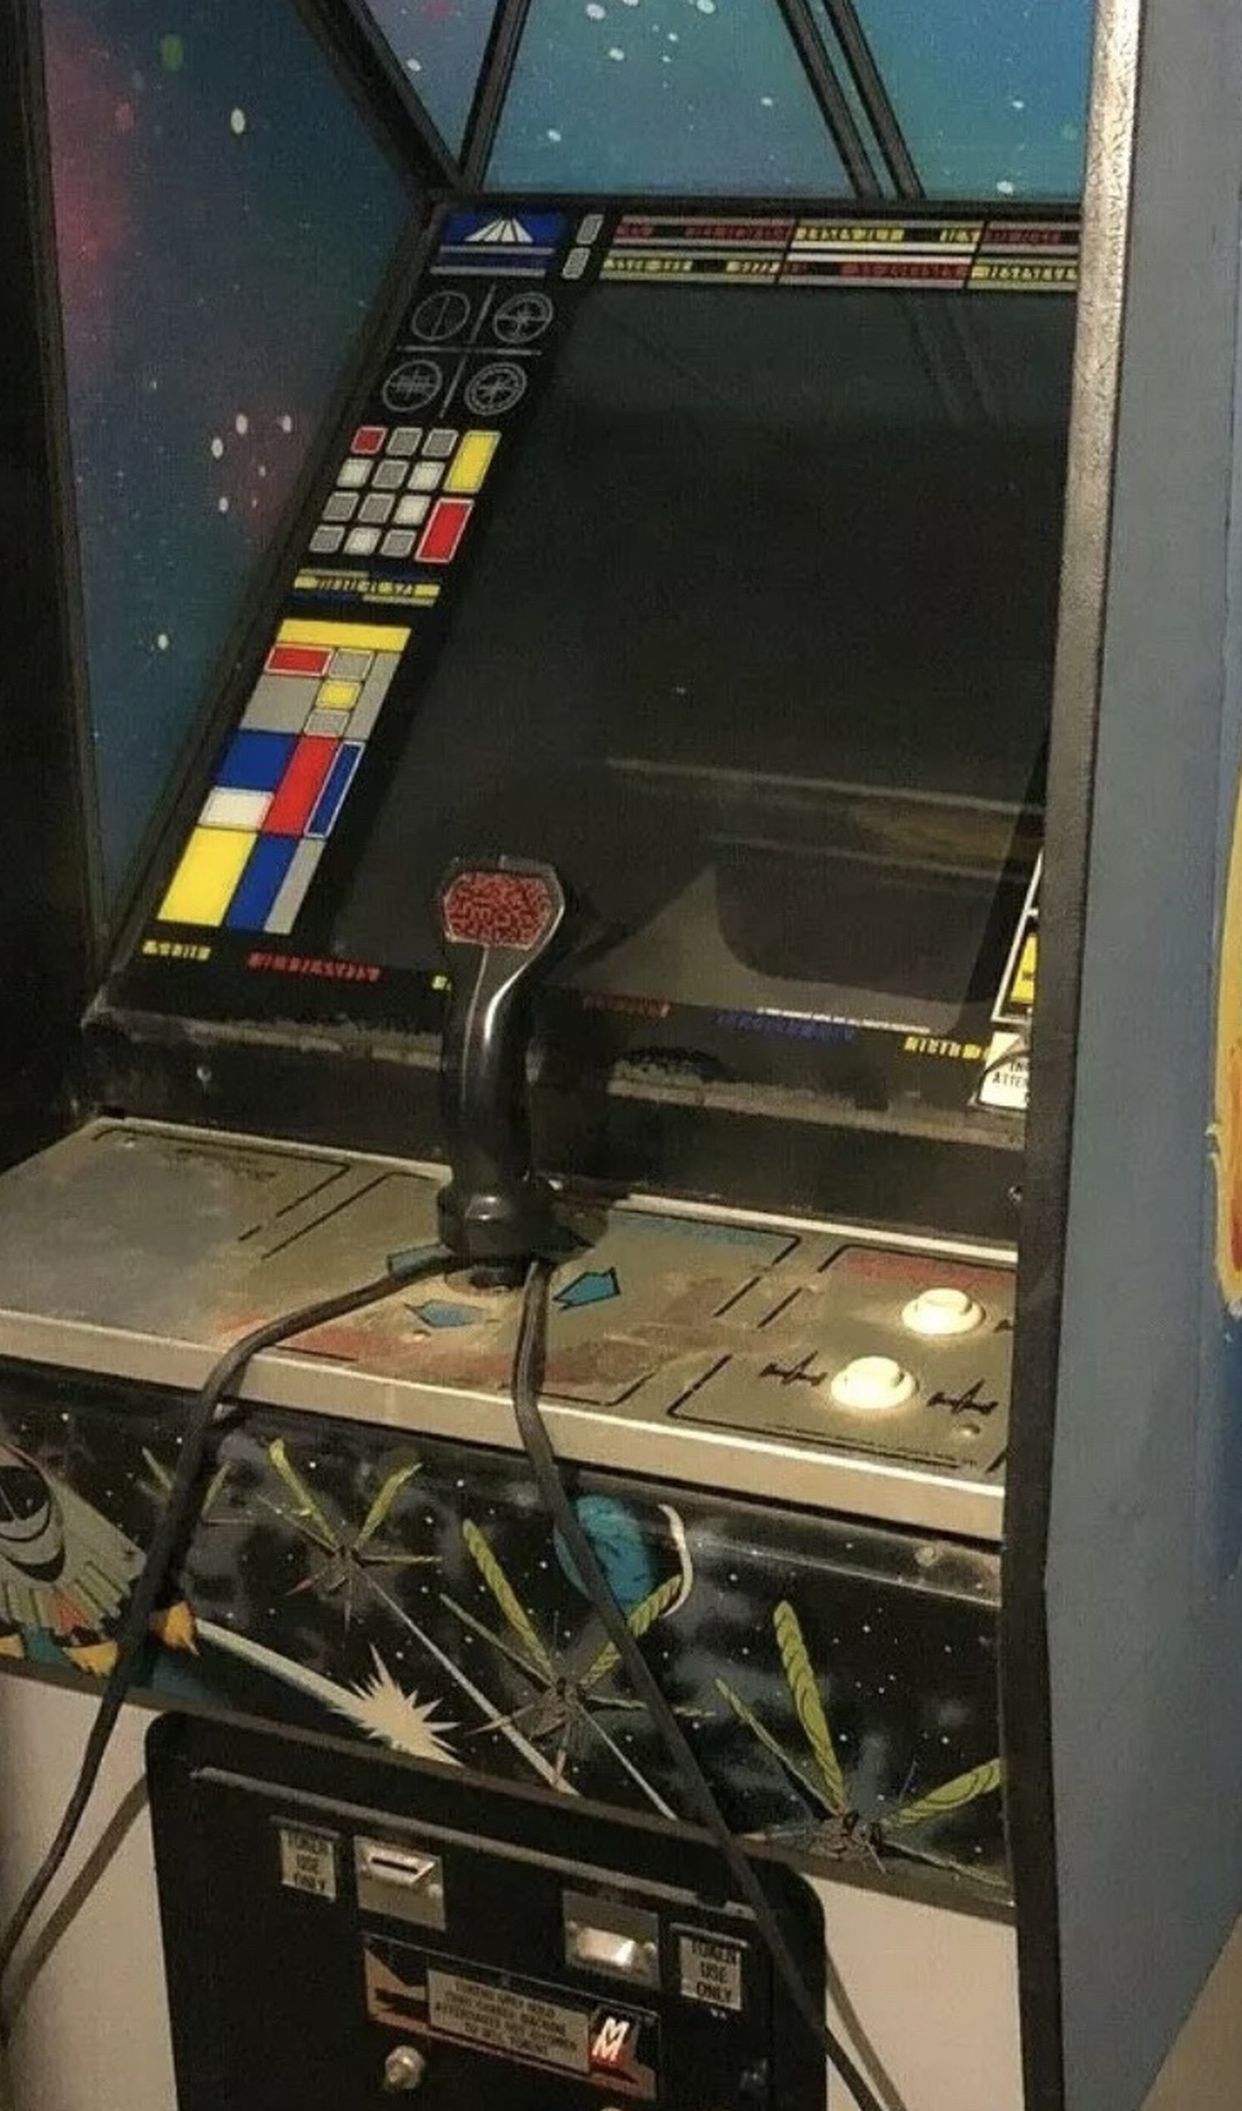 1980 Gorf Arcade Game Machine